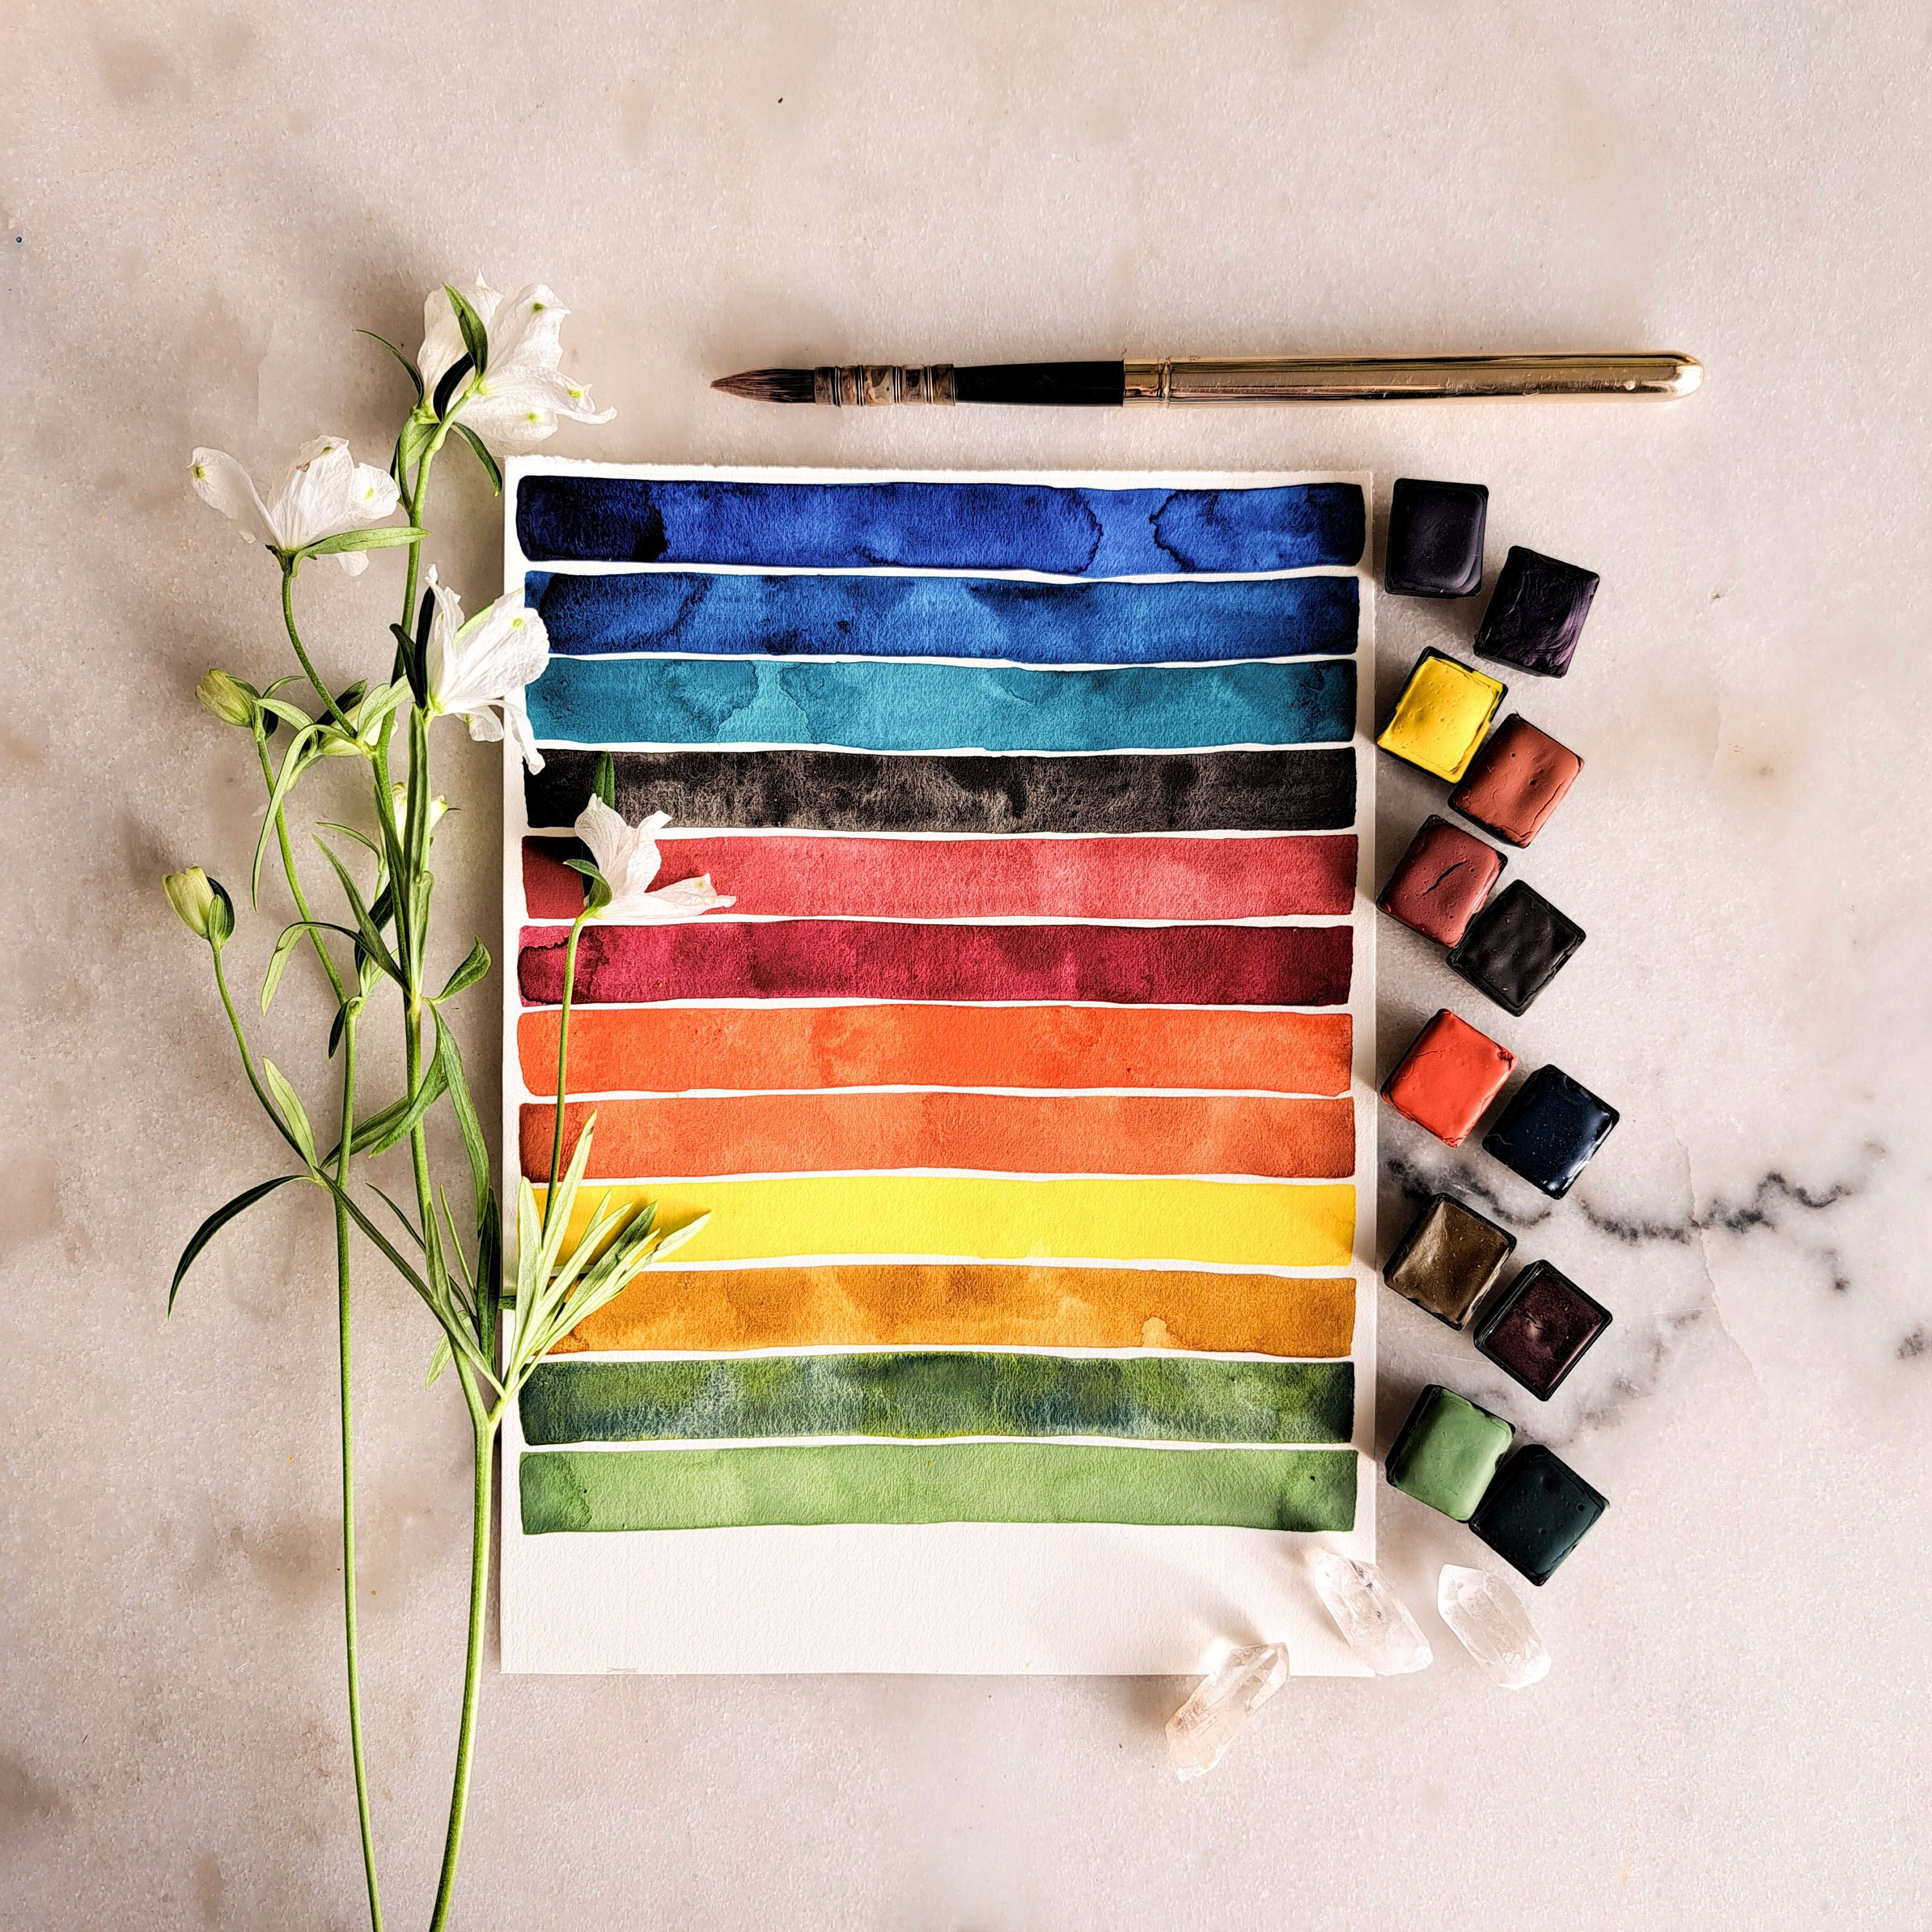 Rainbow Shimmer Watercolor Paint Photograph Art Materials by Imaginarium  Arts Art Print by Imaginarium Arts